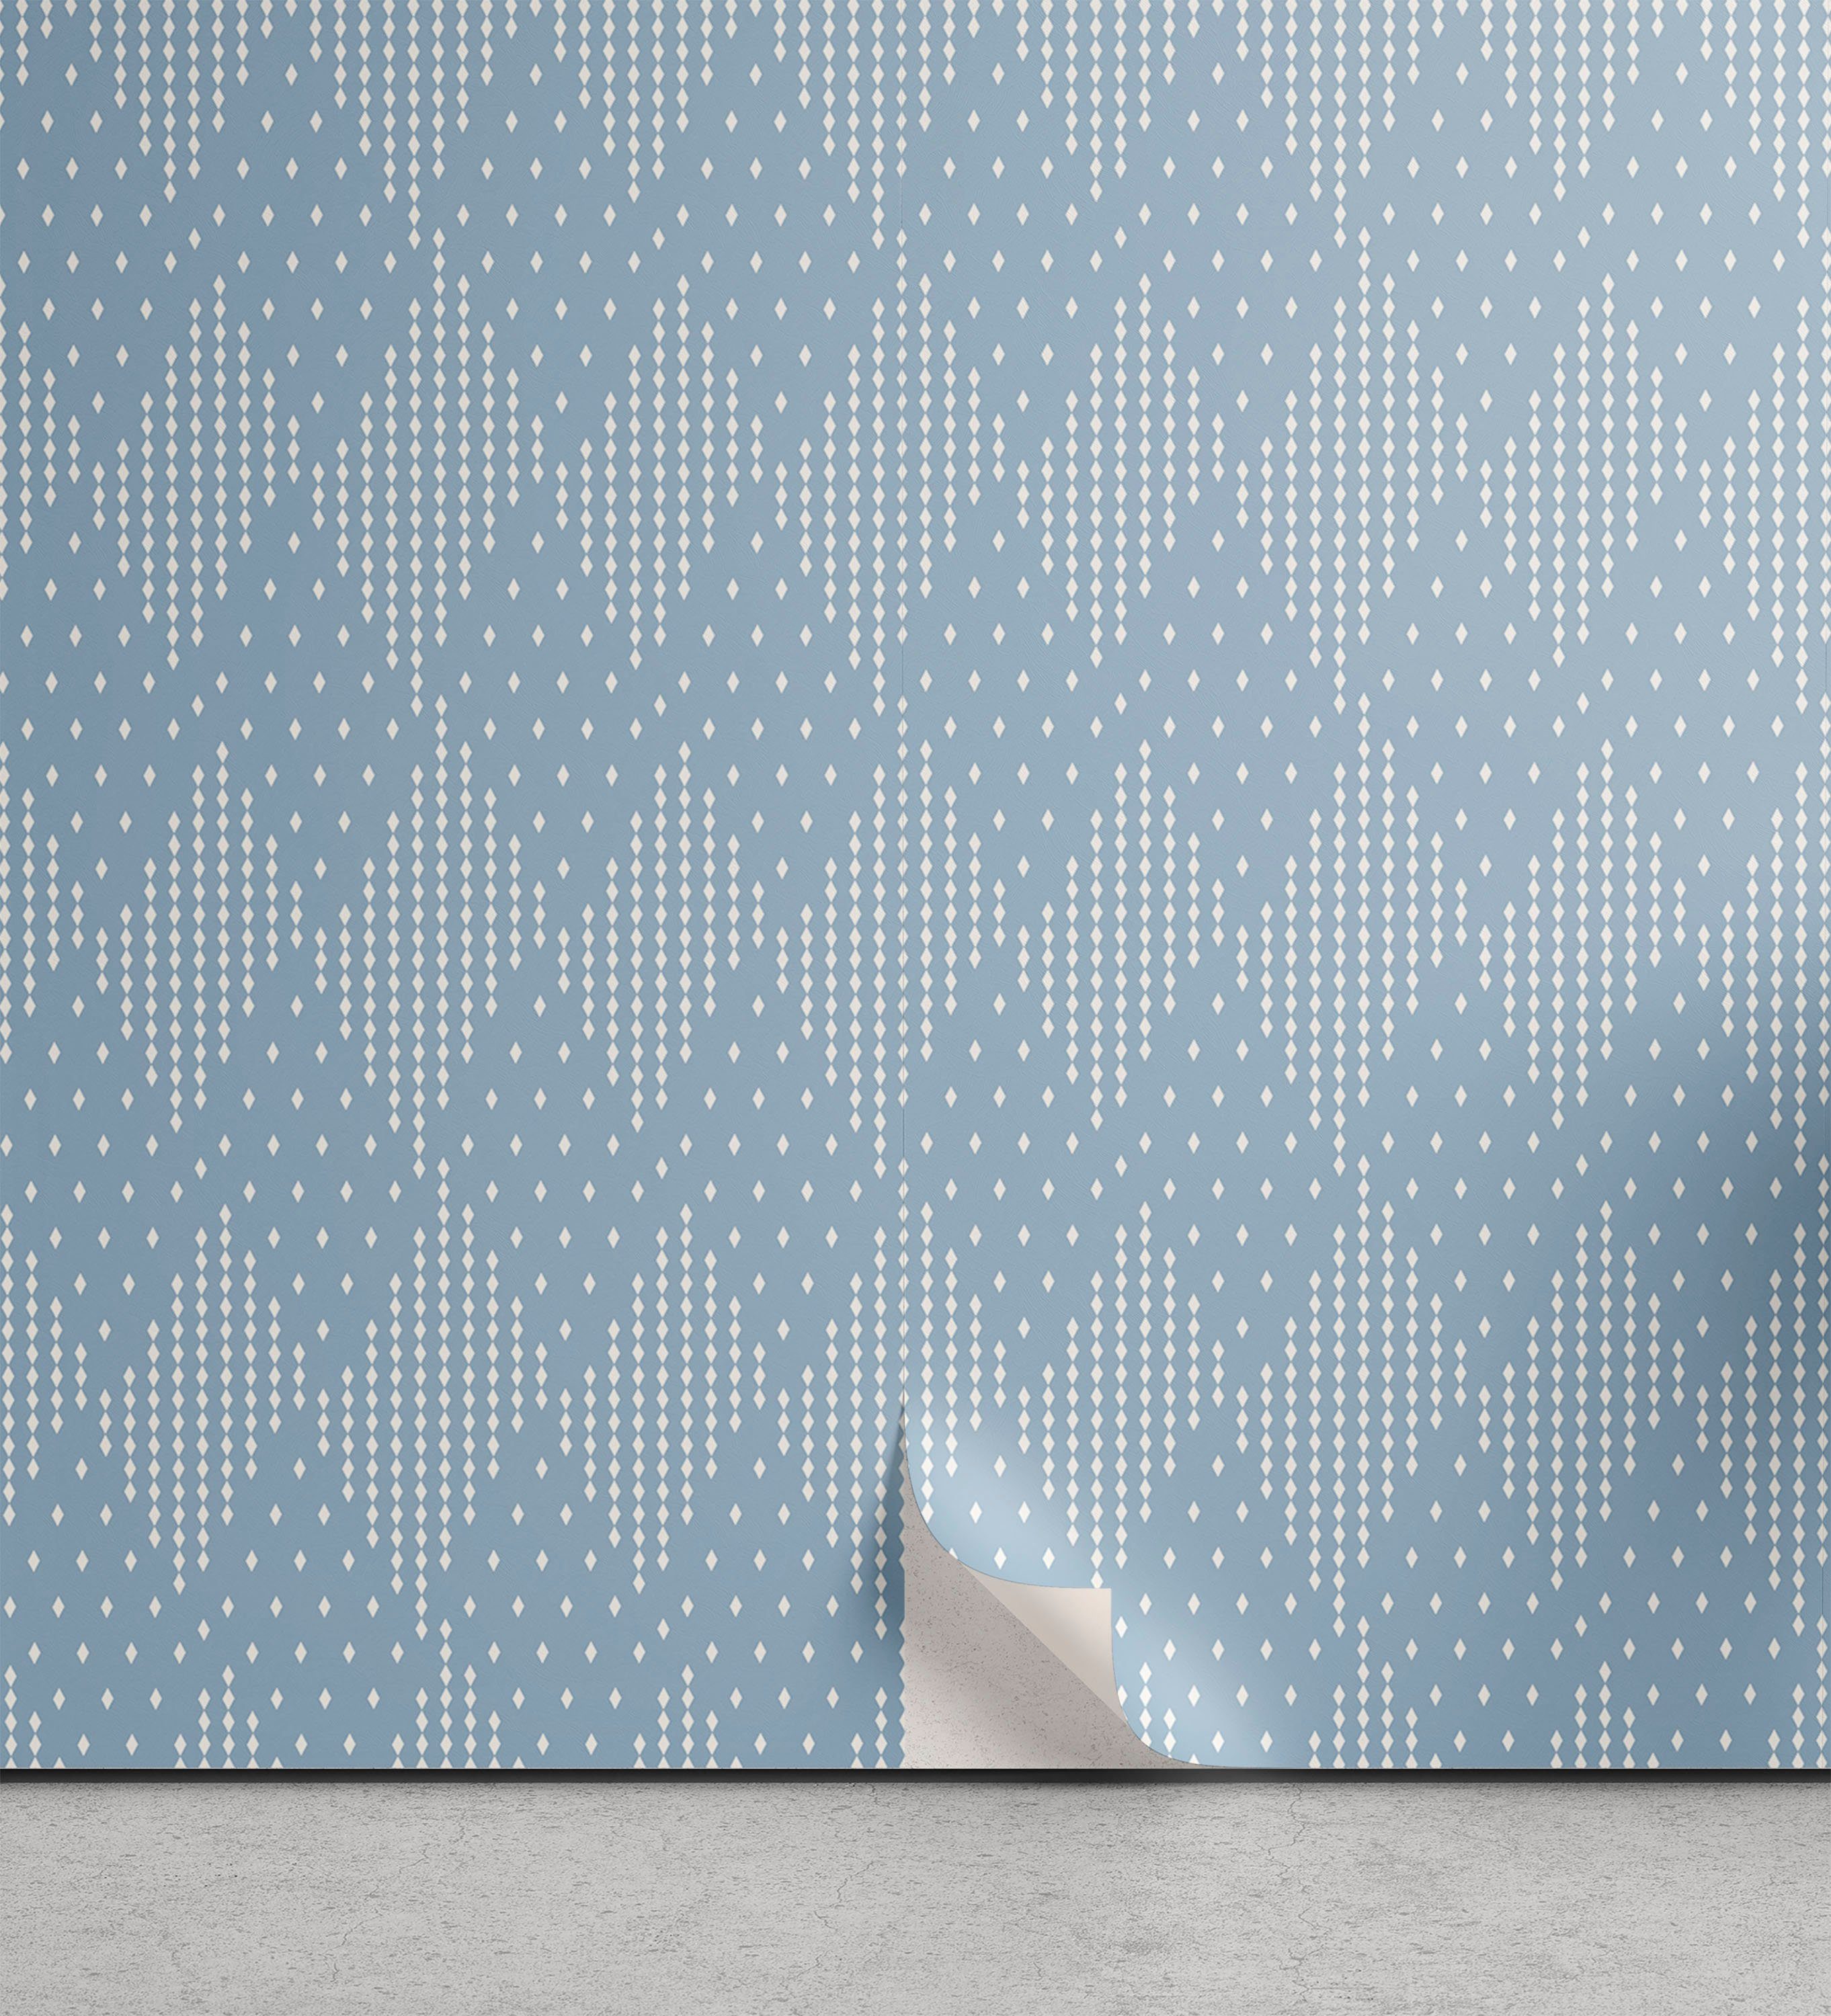 Abakuhaus Vinyltapete selbstklebendes Wohnzimmer Küchenakzent, Art Deco Muster mit Tiny Rhombus